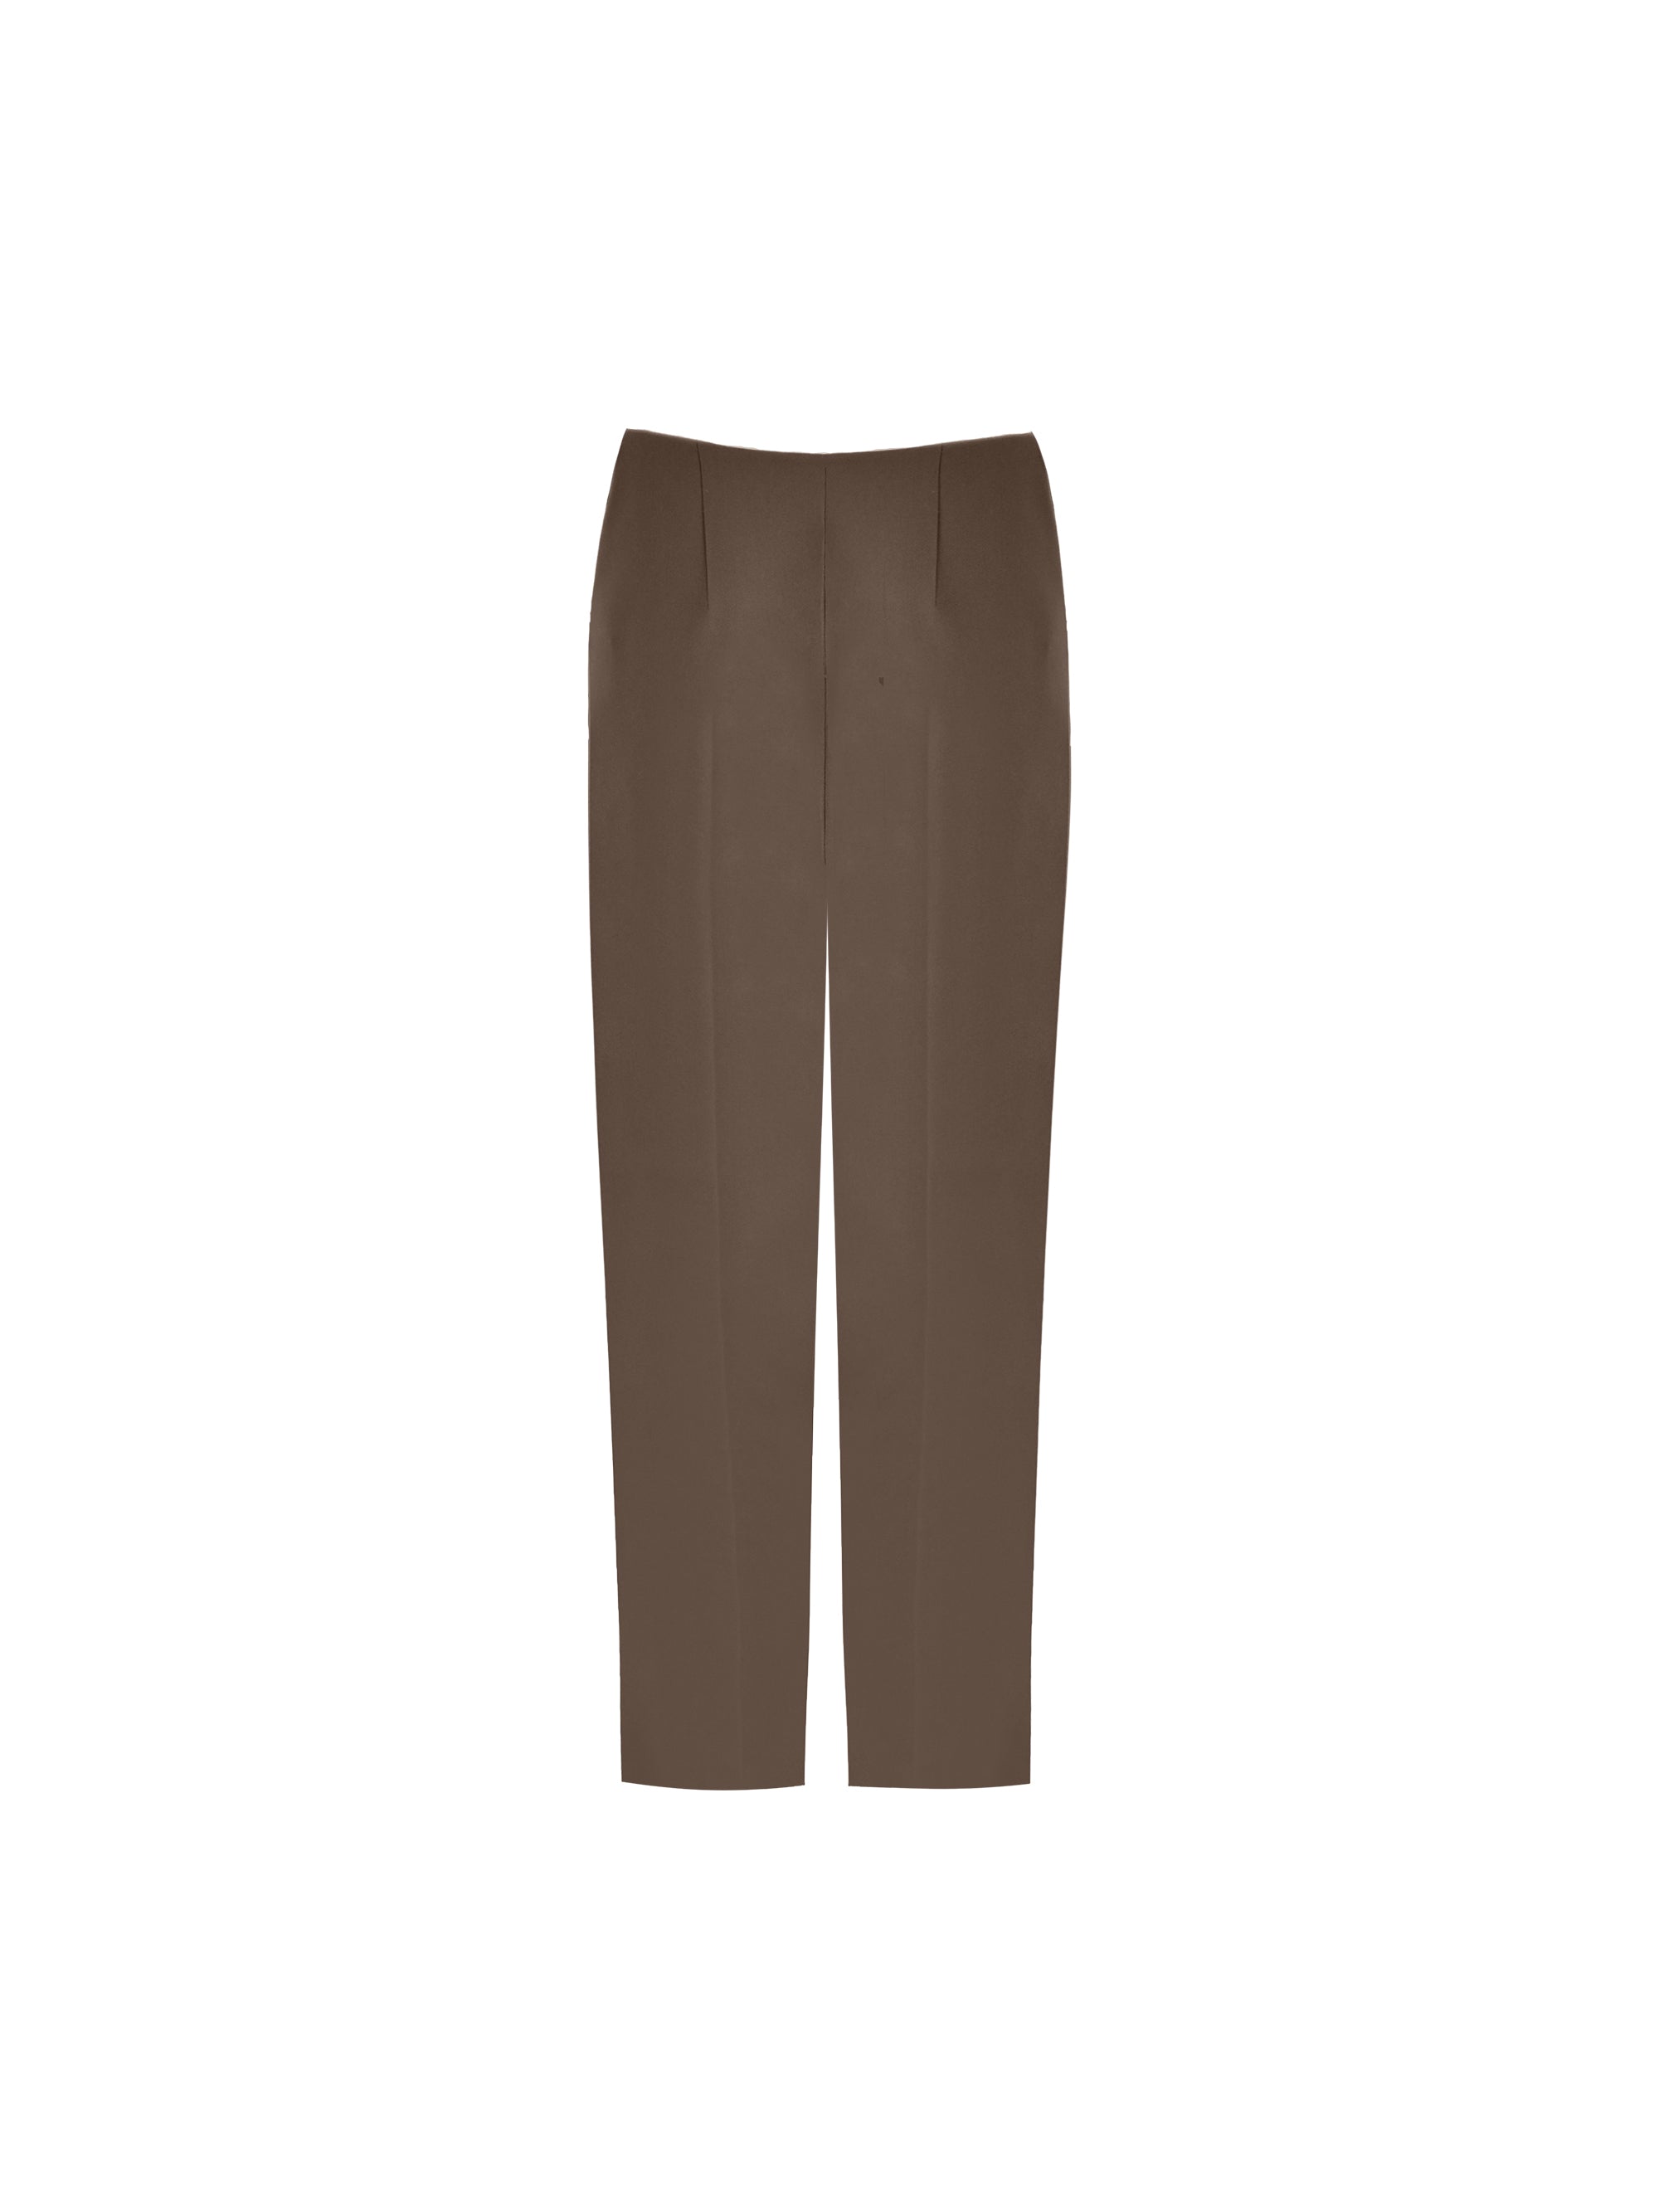 Buy Women Brown Solid Formal Trousers Online - 168302 | Van Heusen